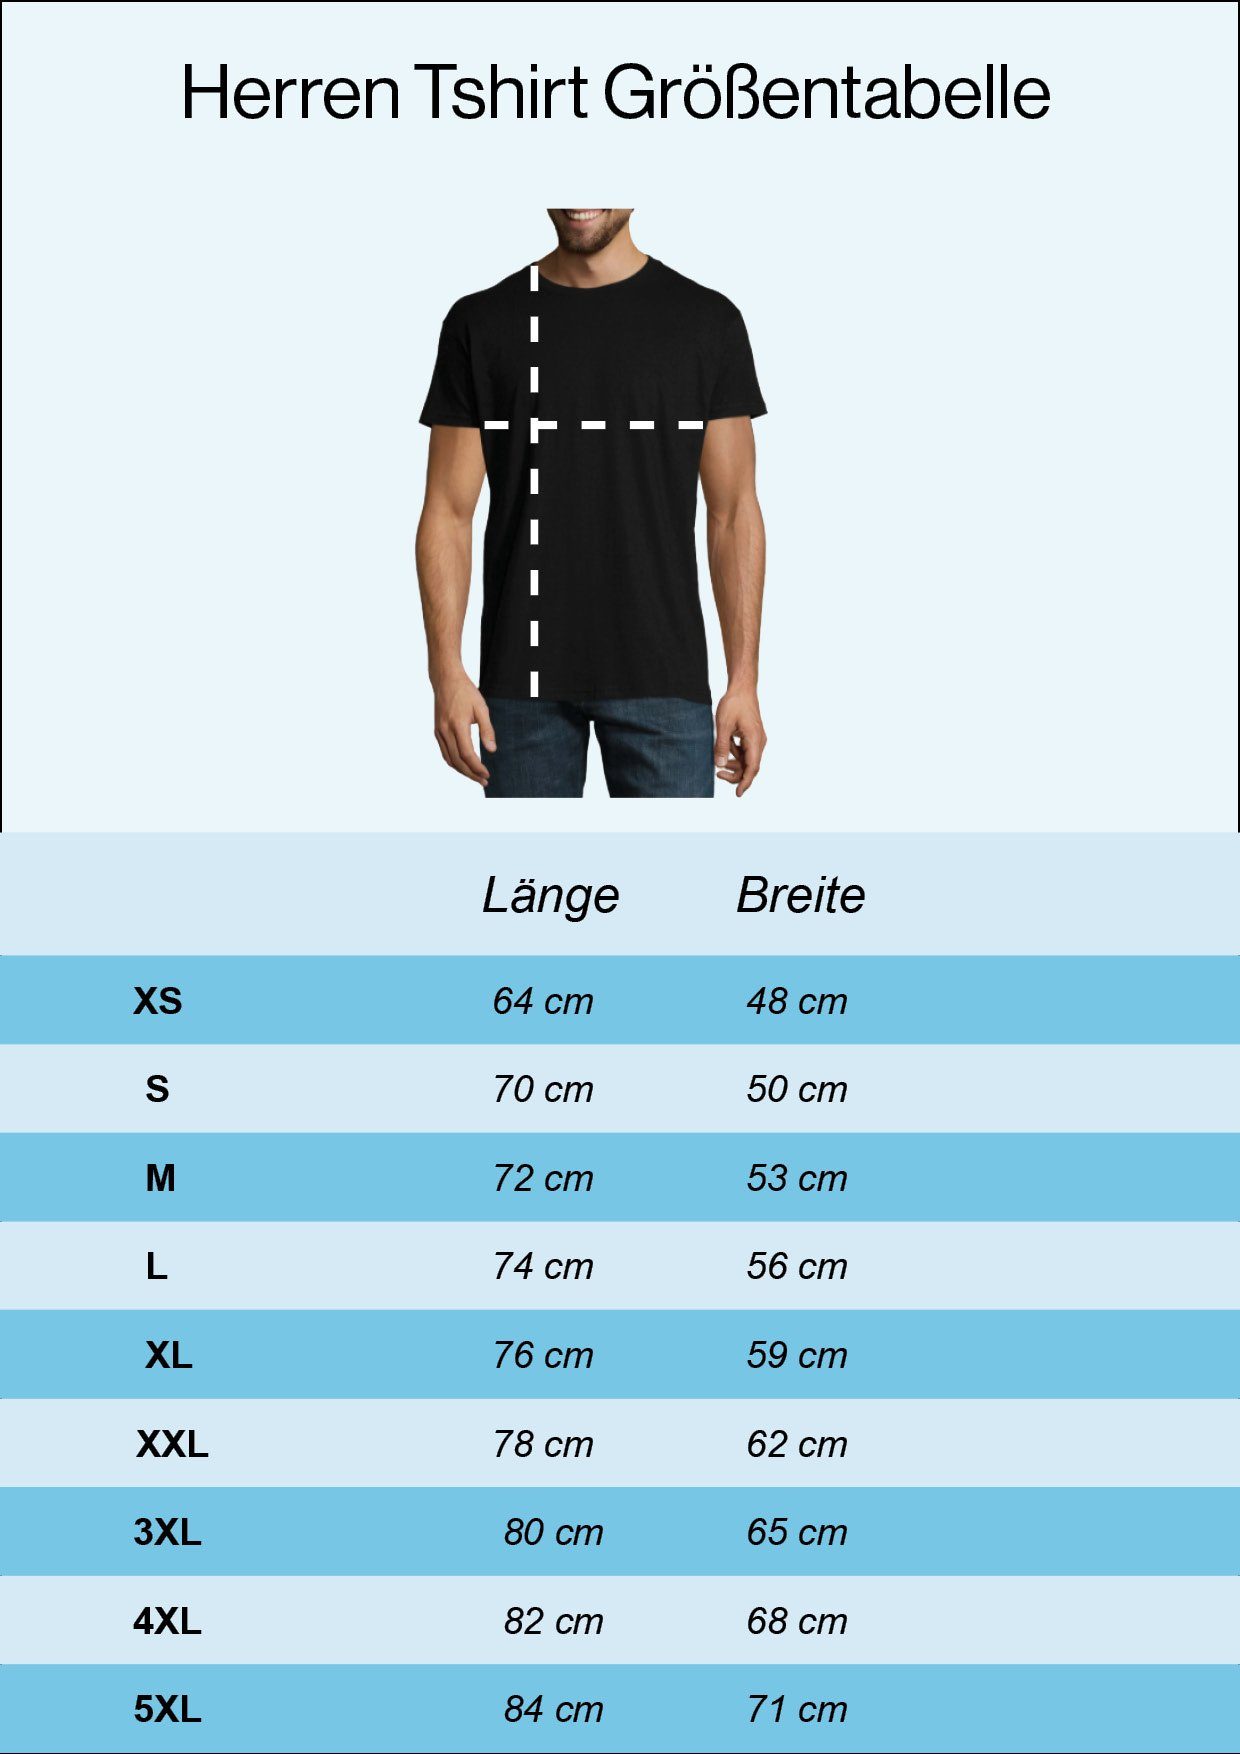 Youth Designz T-Shirt UK England Shirt trendigem Herren Totenkopf Logo Frontprint mit Schädel Navyblau